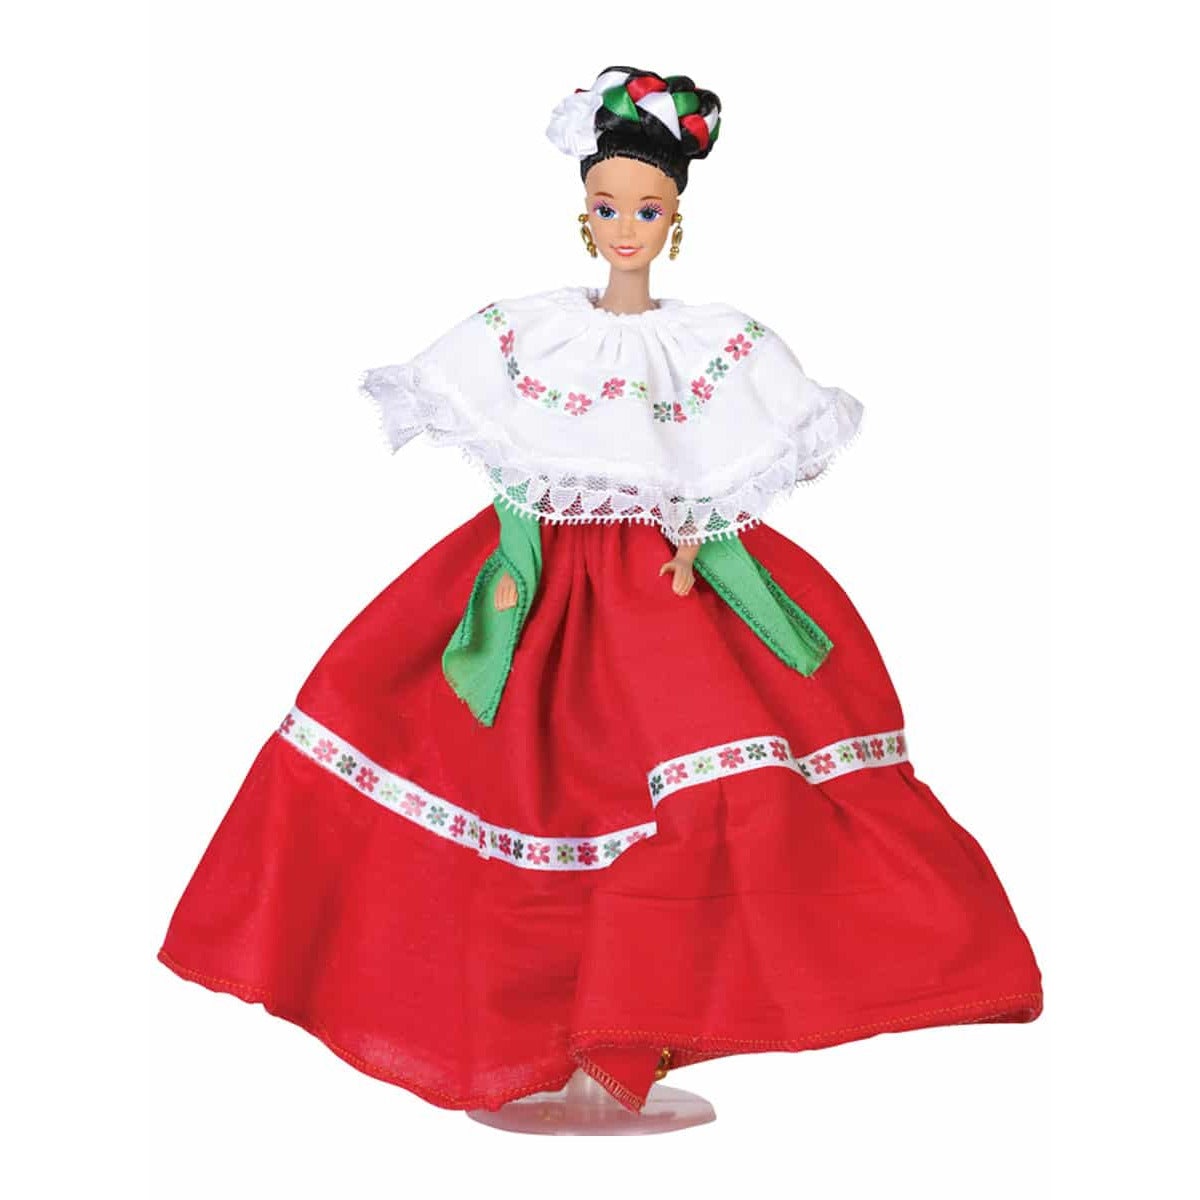 Zacatecas Mexican Doll - CharroAzteca.com